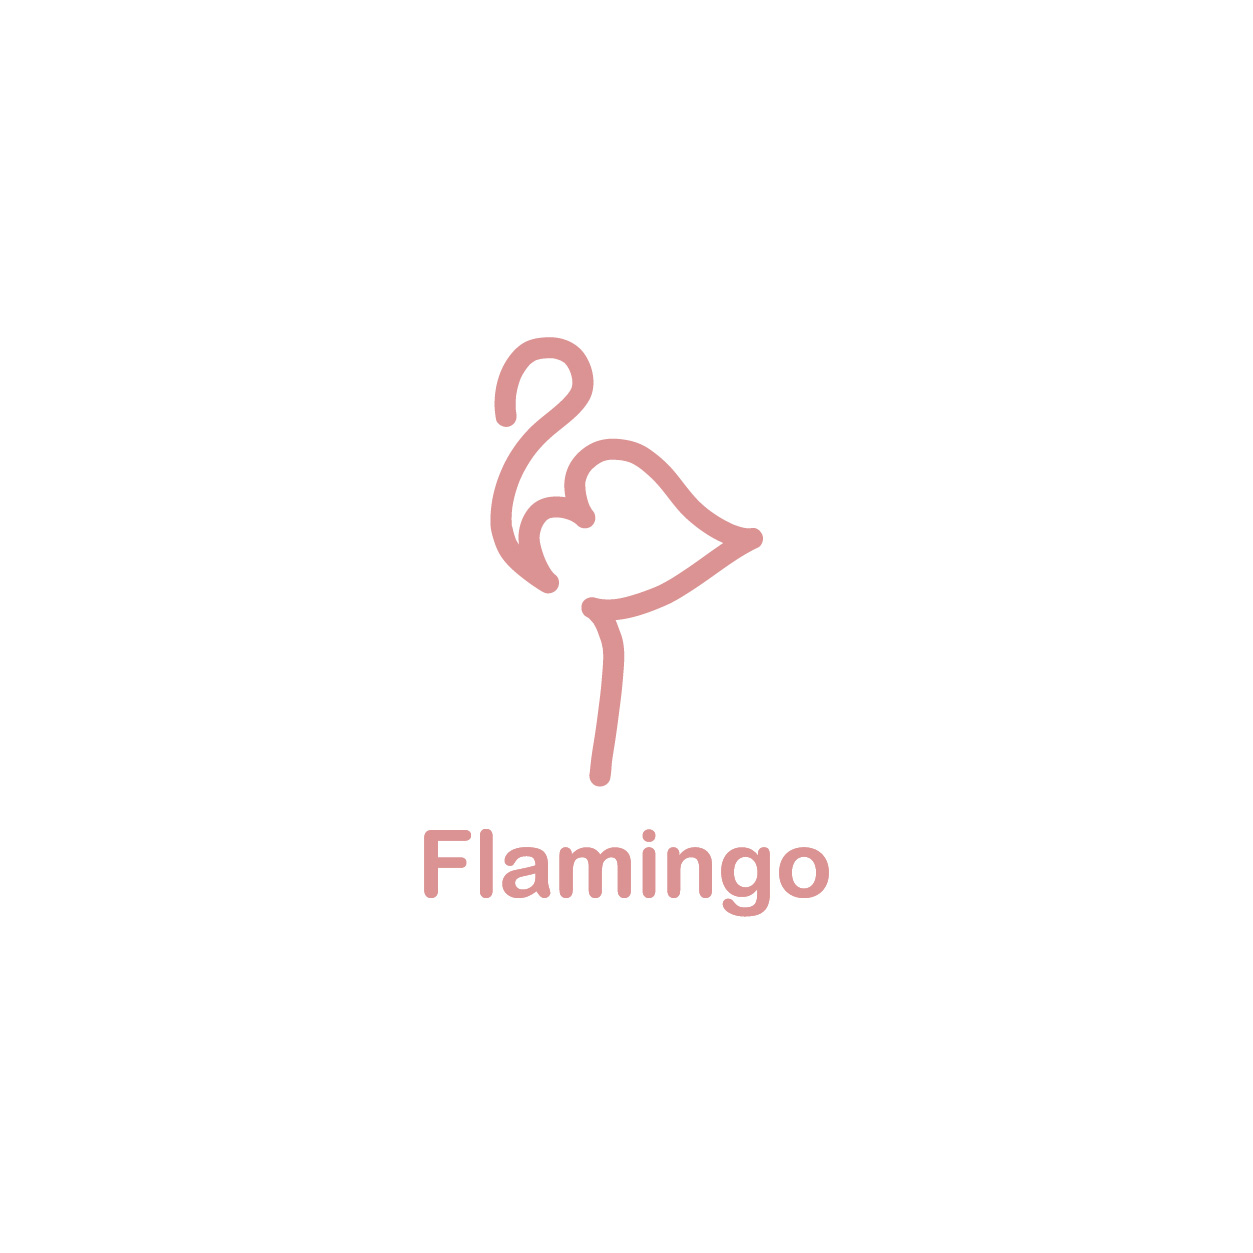 Flamingo Brand Logo Design フラミンゴ ブランドロゴデザイン Yourmoon ユアムーン株式会社